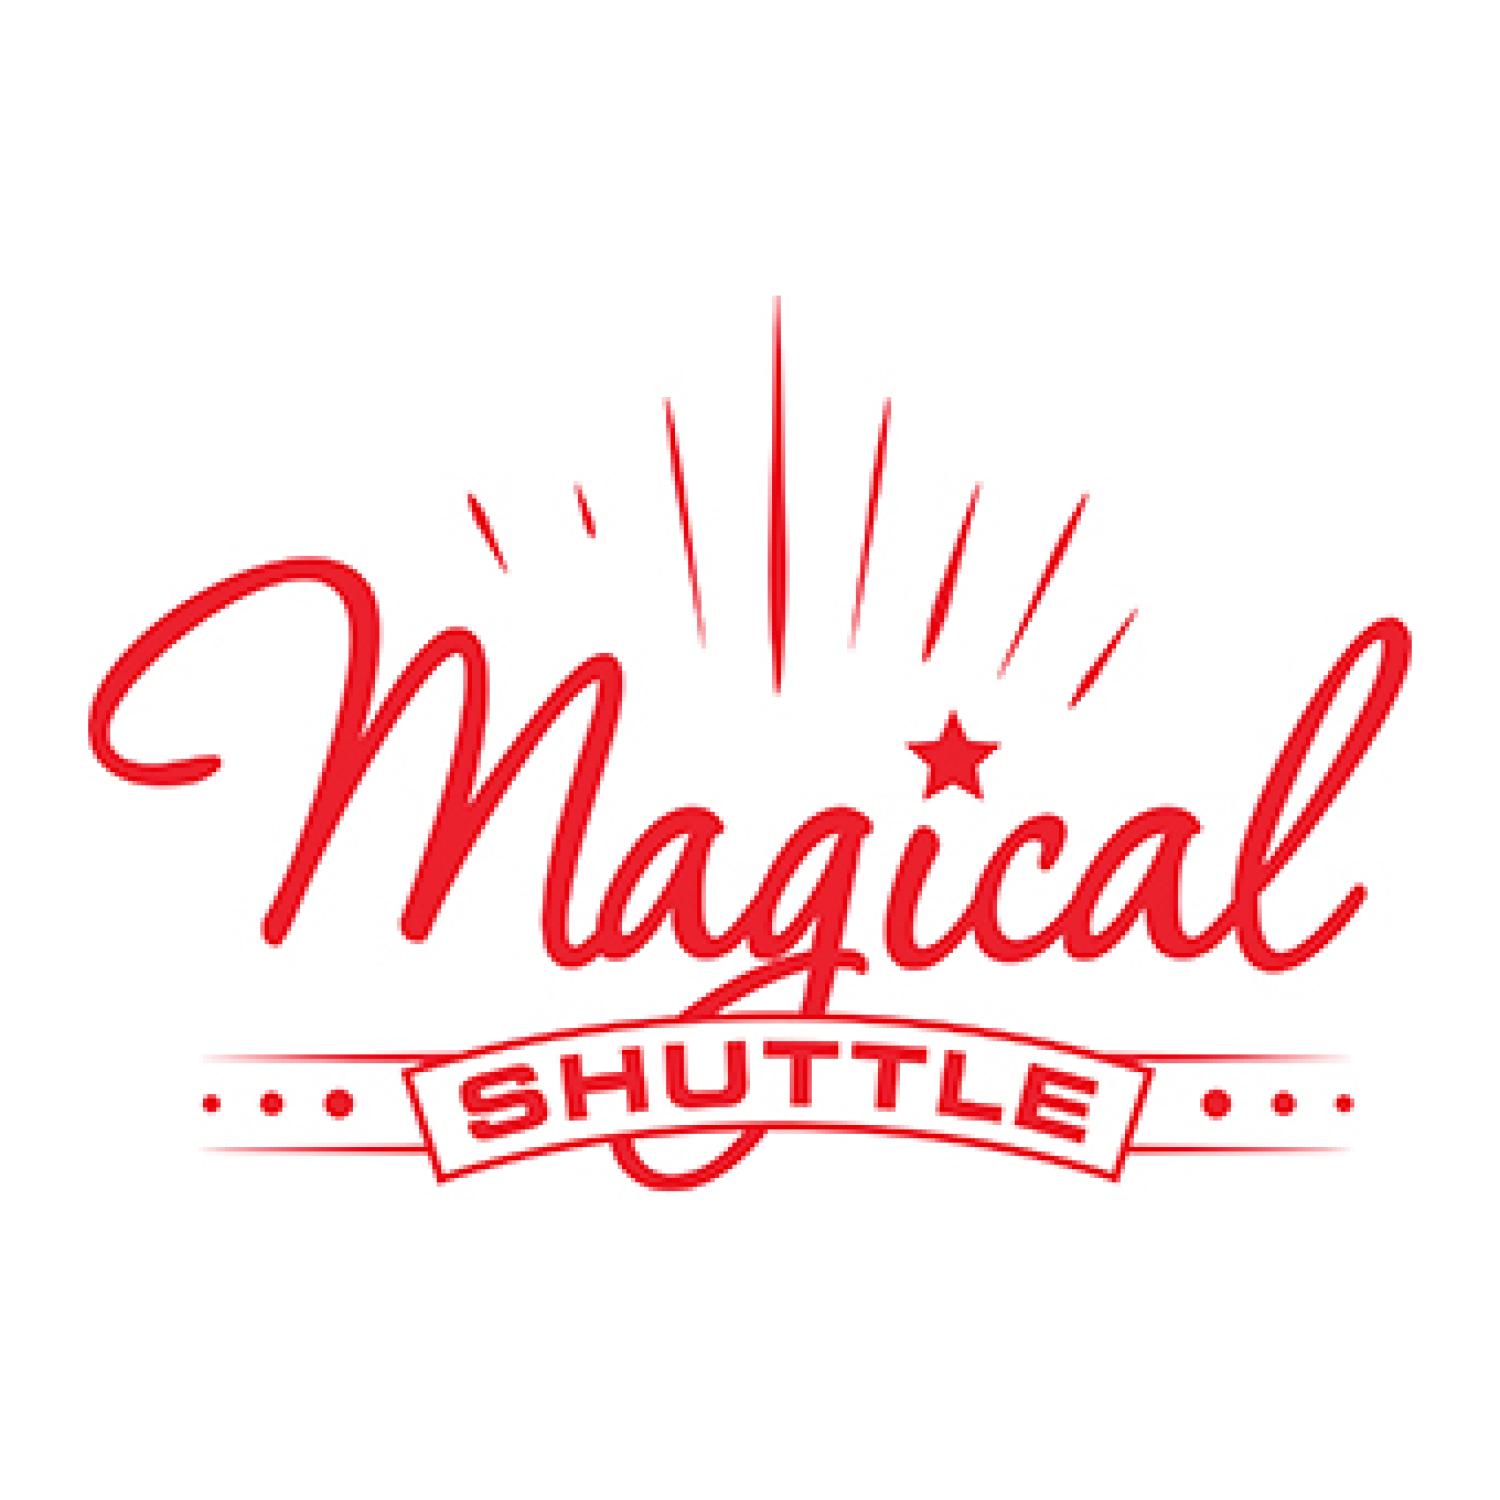 Magical Shuttle